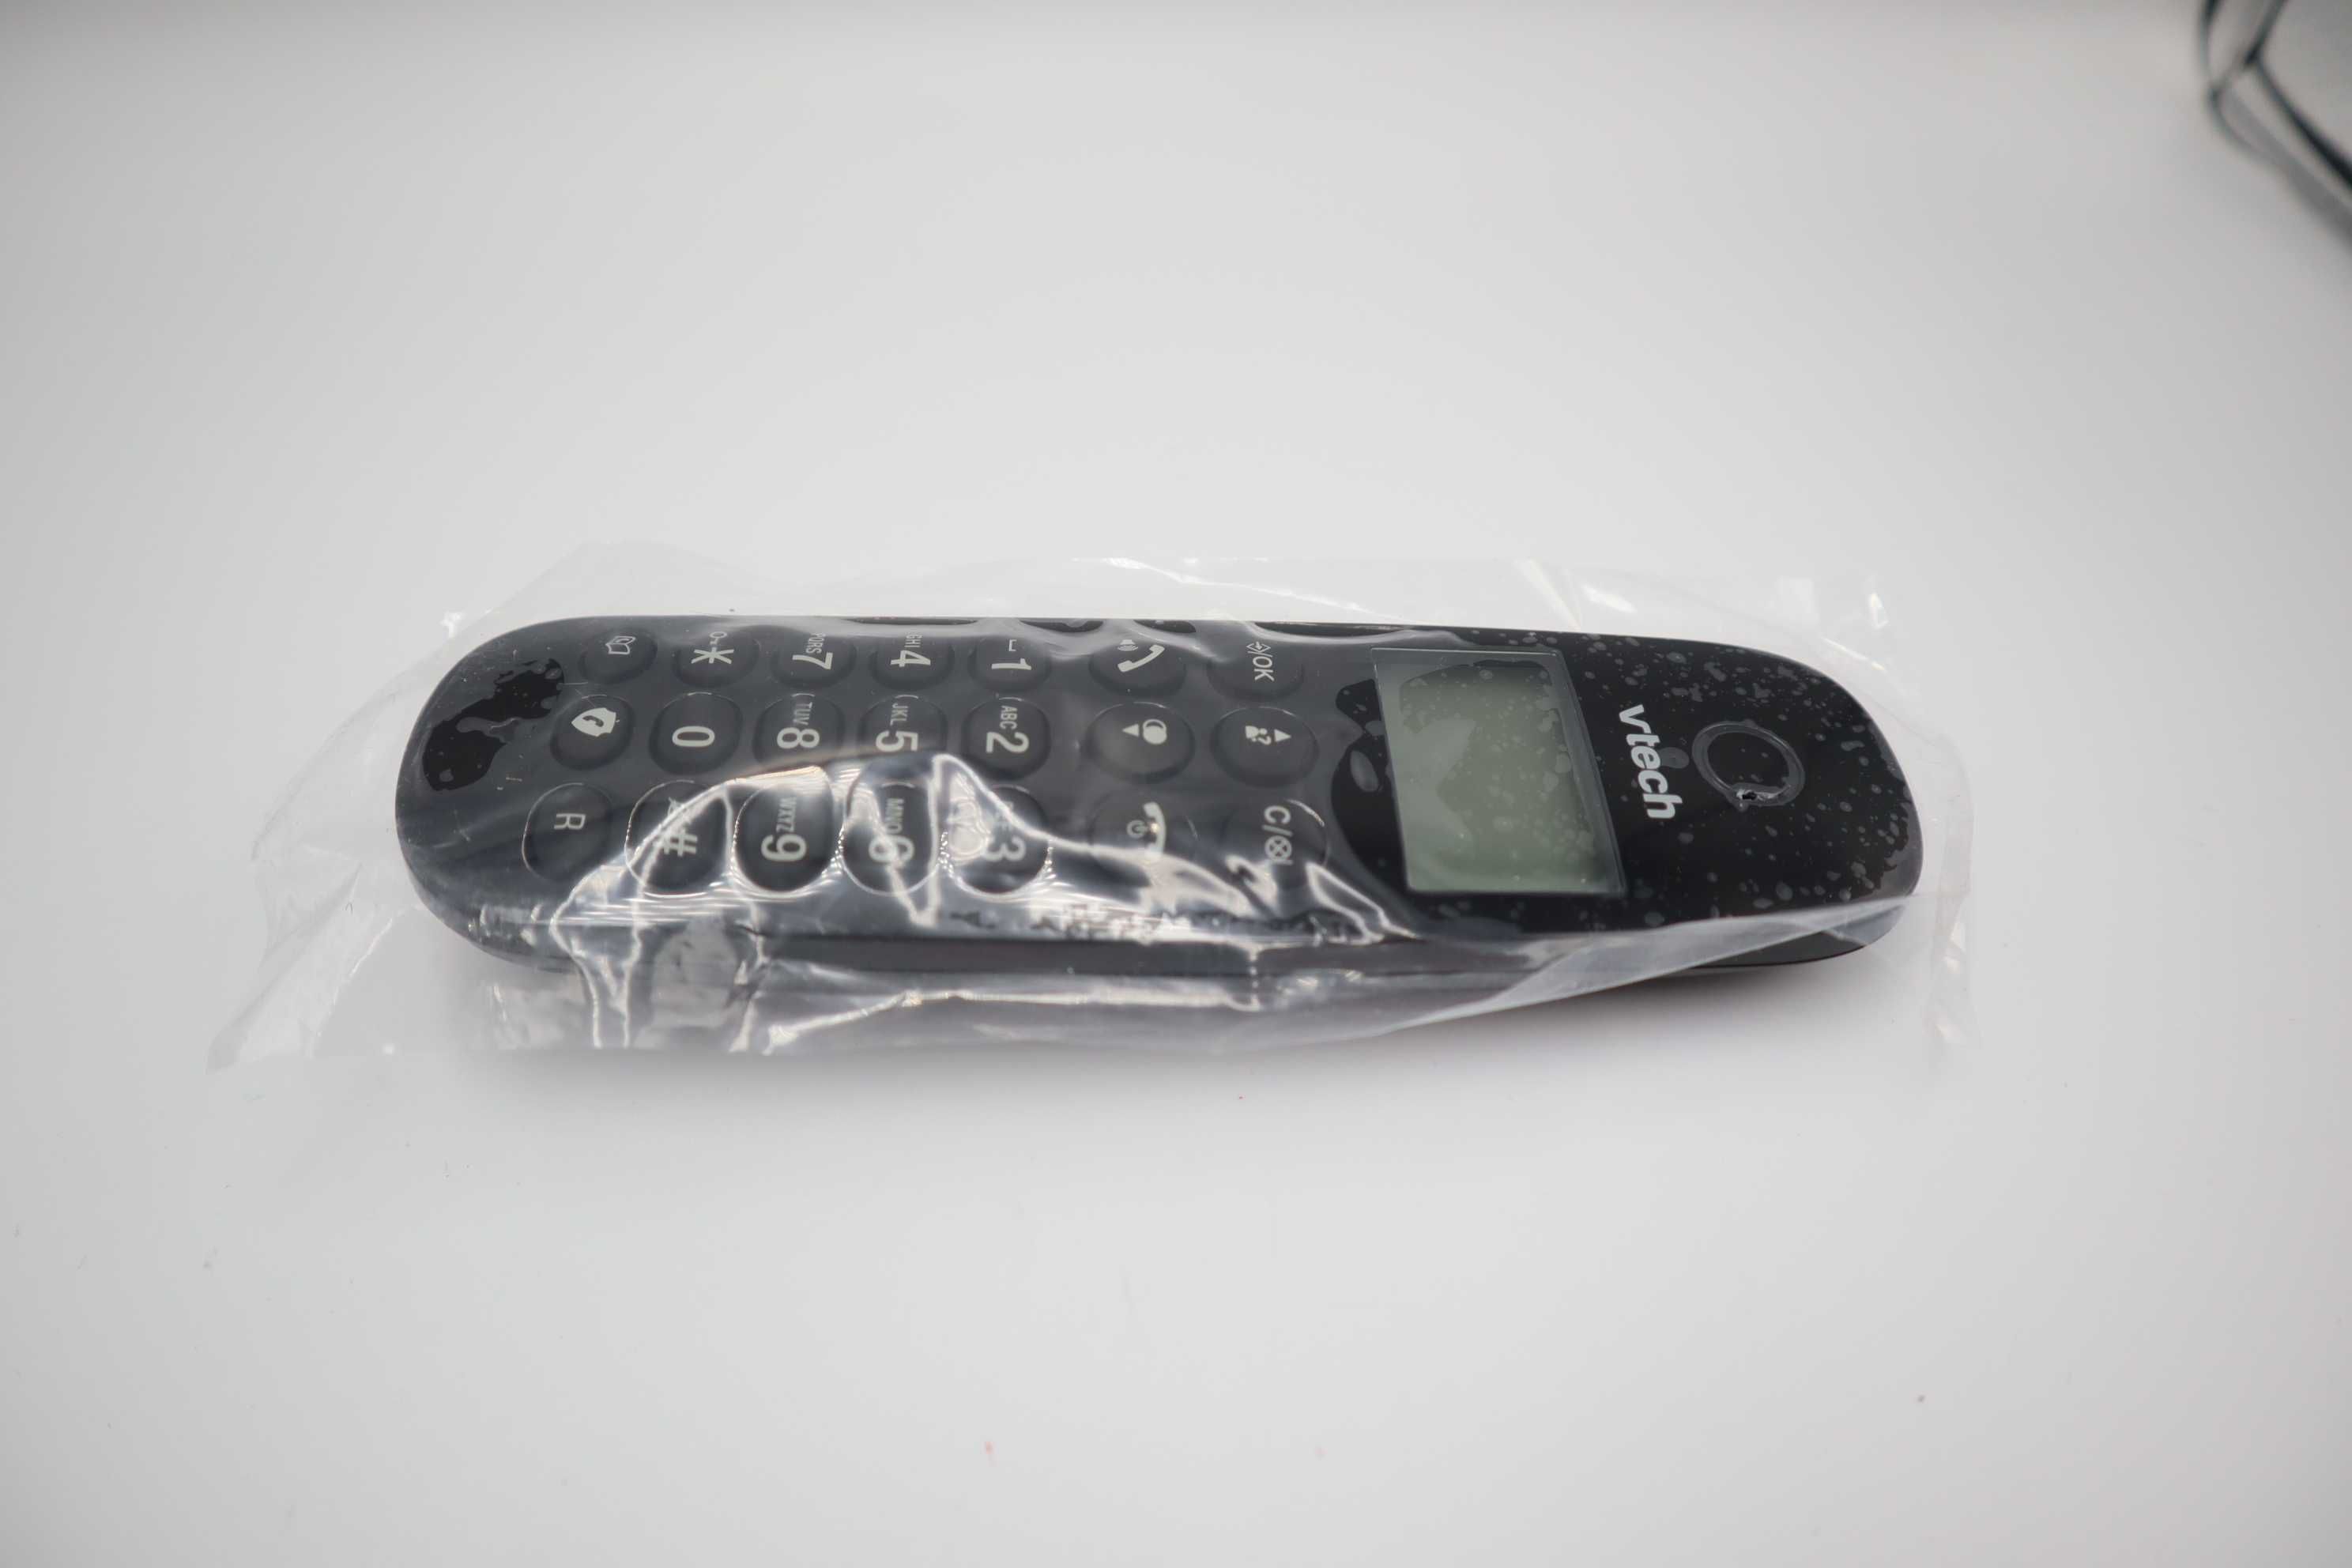 Telefon bezprzewodowy Vtech CS1400